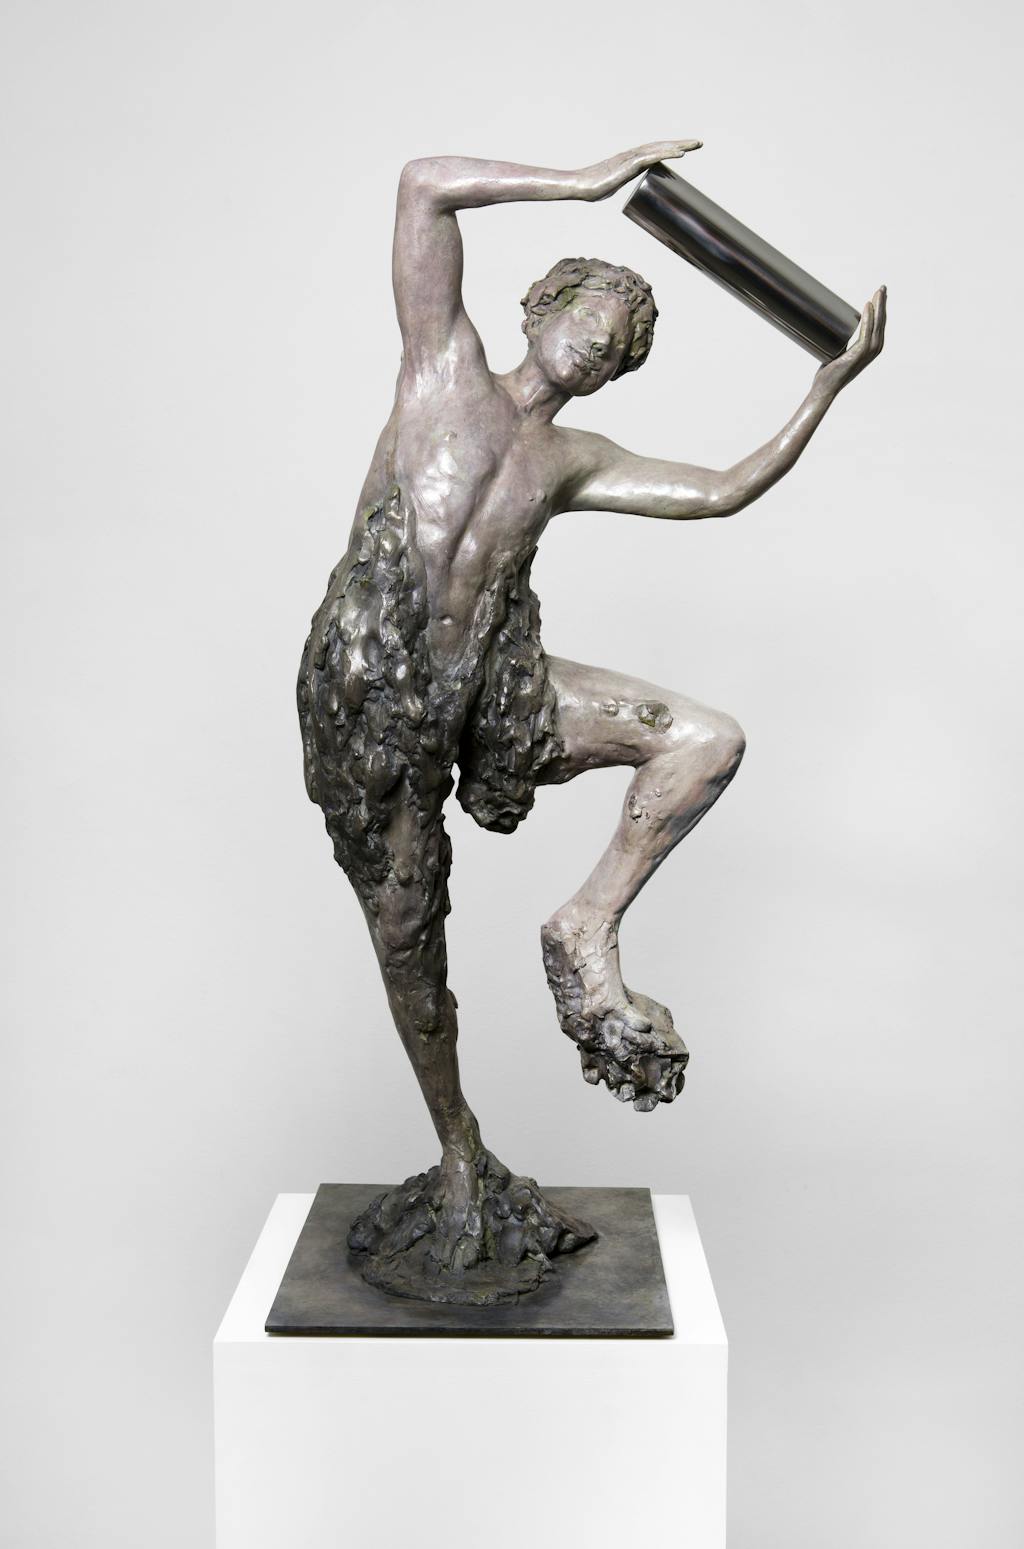 Martial Raysse
Arraches Toi ?, 2016
Bronze
80 x 42 x 33 cm - © Mennour